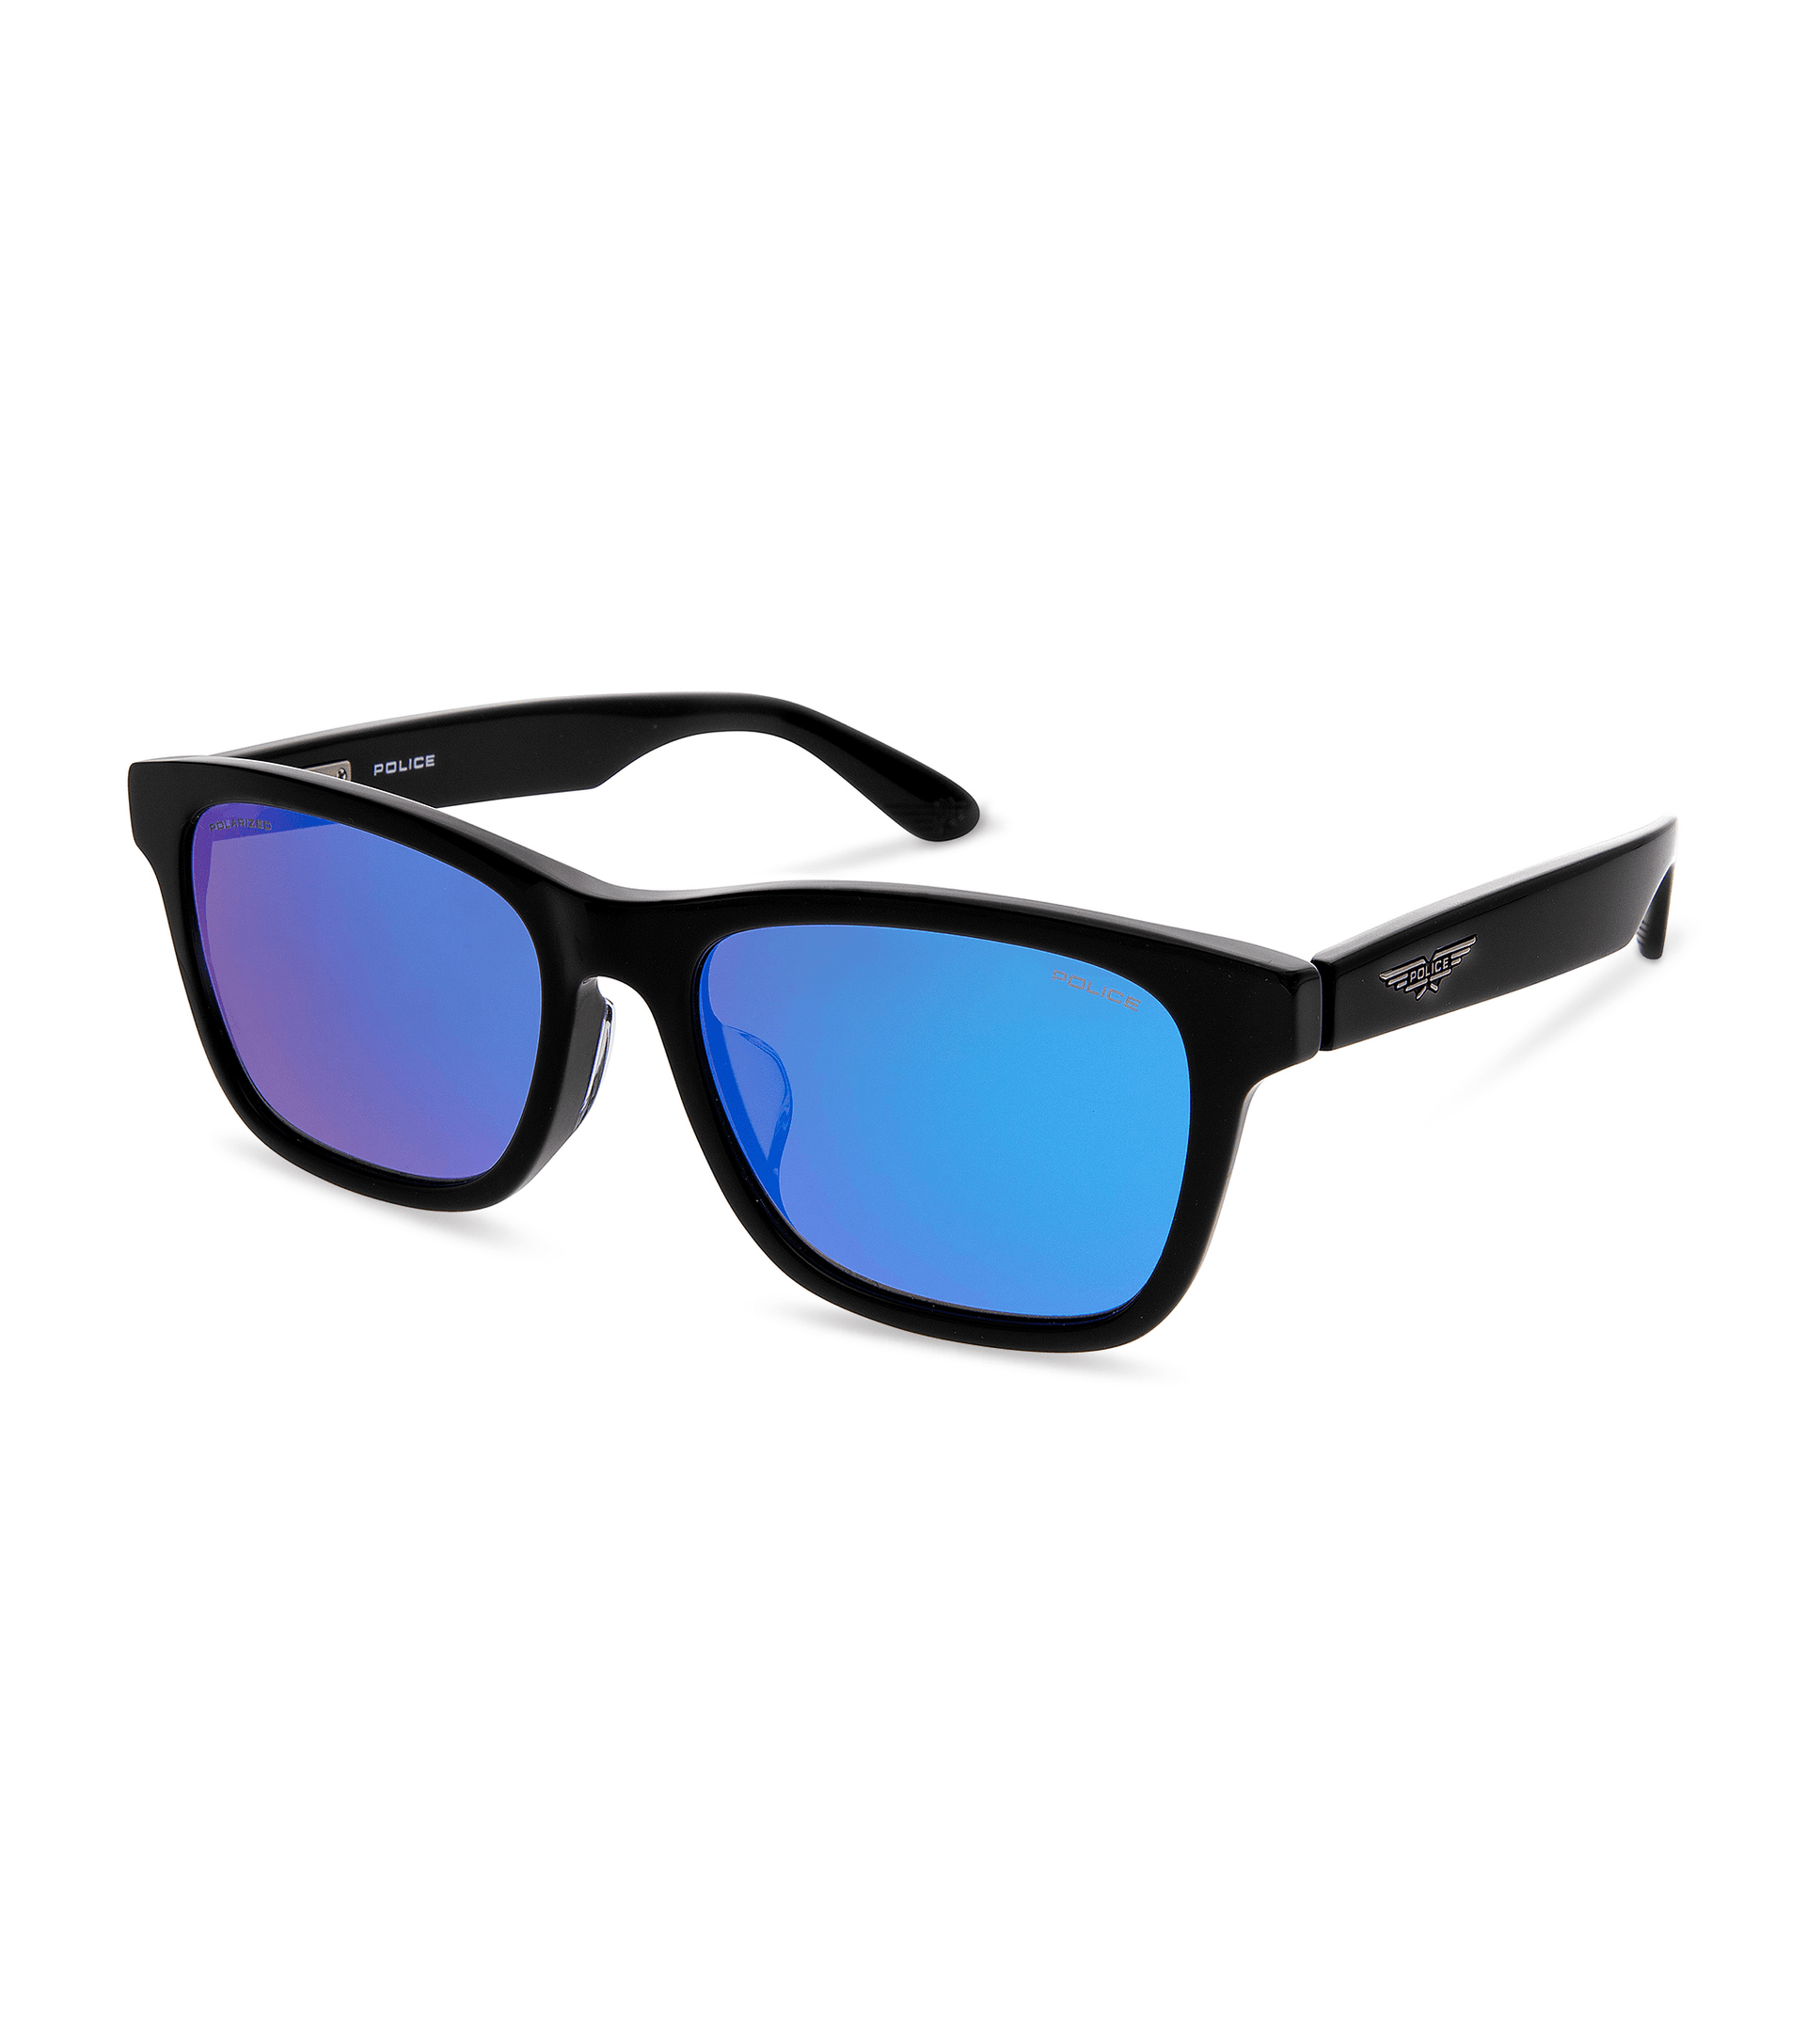 Police sunglasses - Unisex Sunglasses Police Black, Grey